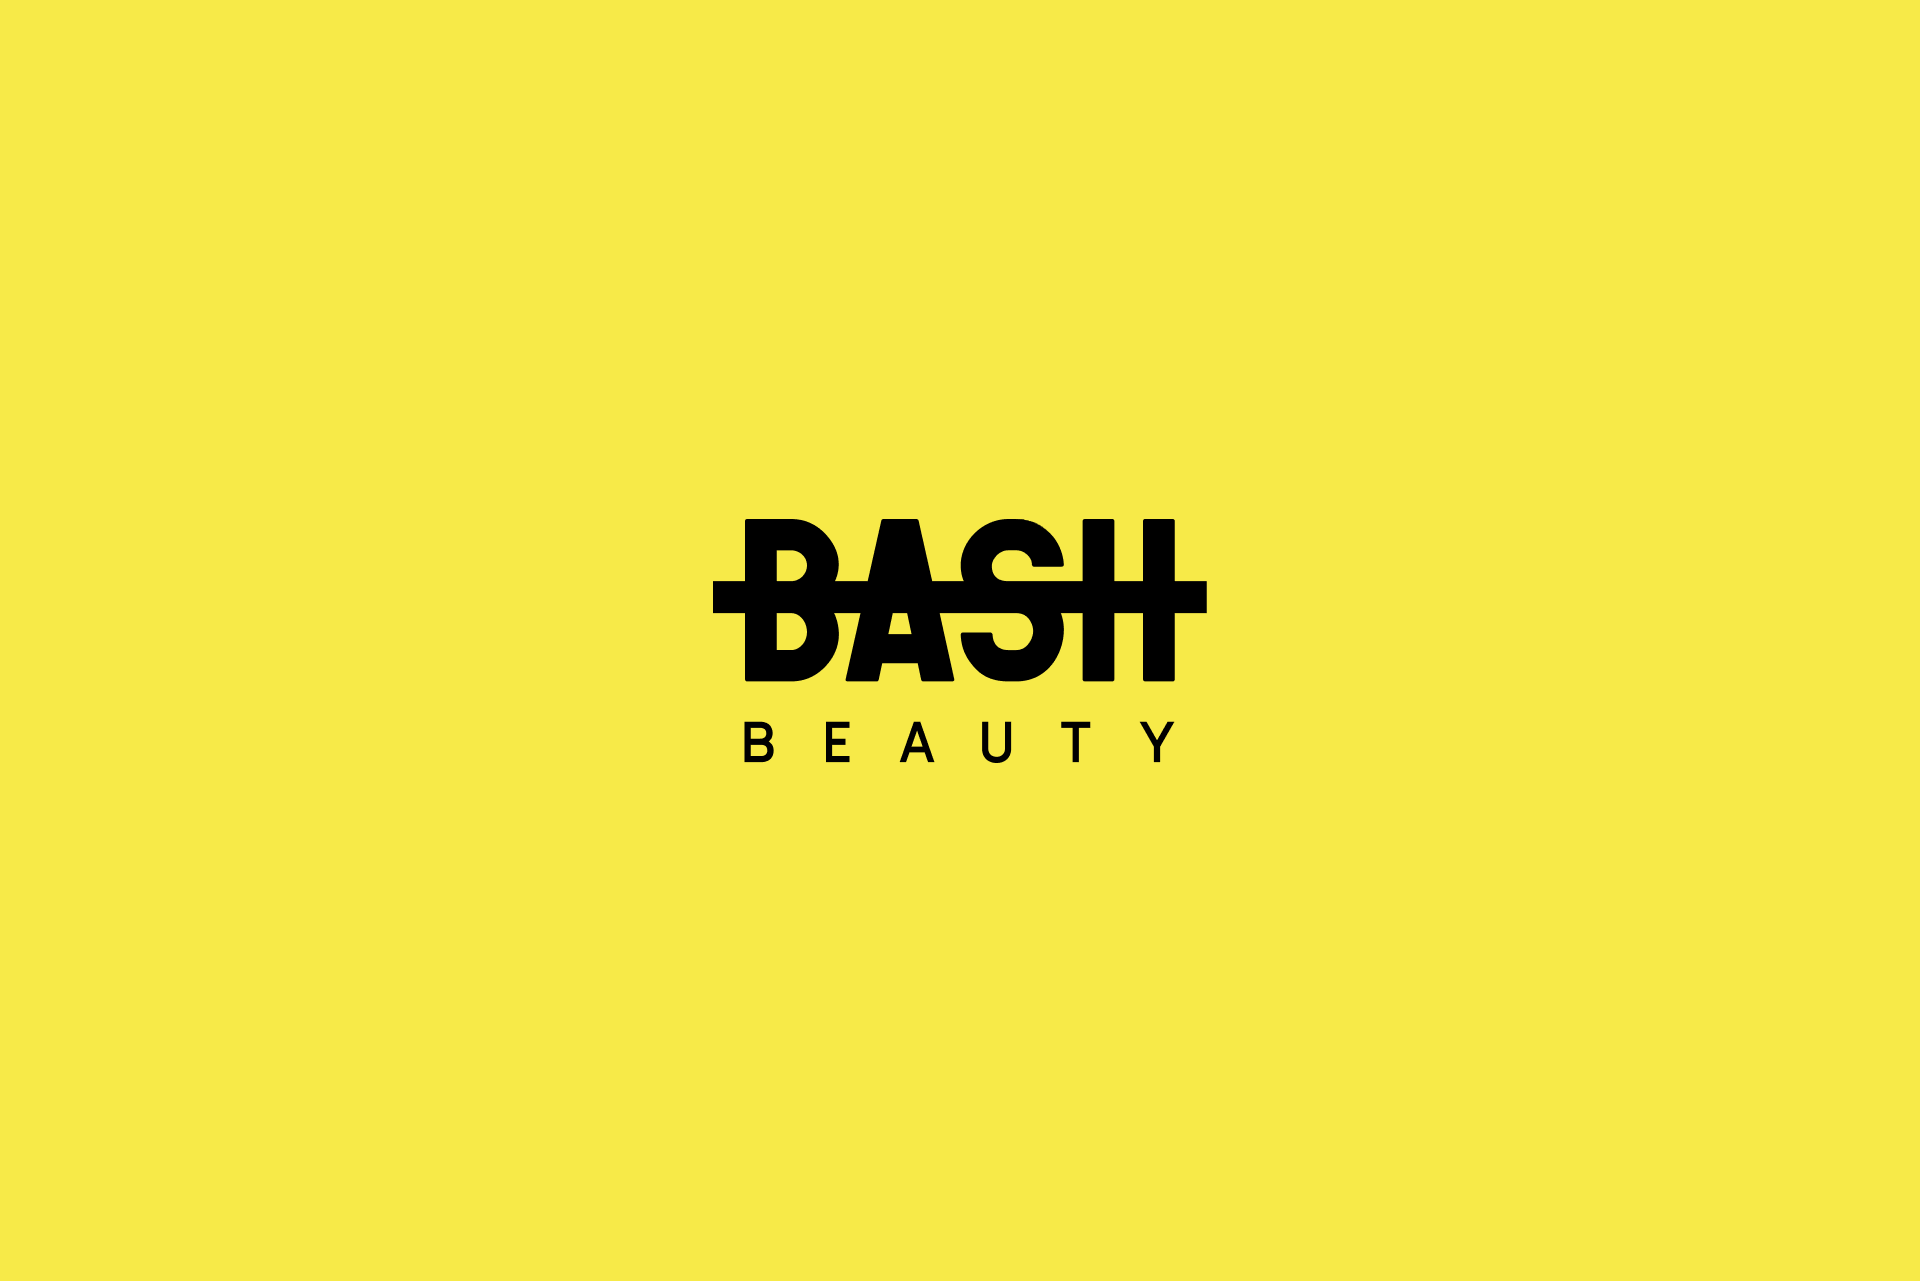 Manifesto Bash Beauty: a beleza começa no cuidado